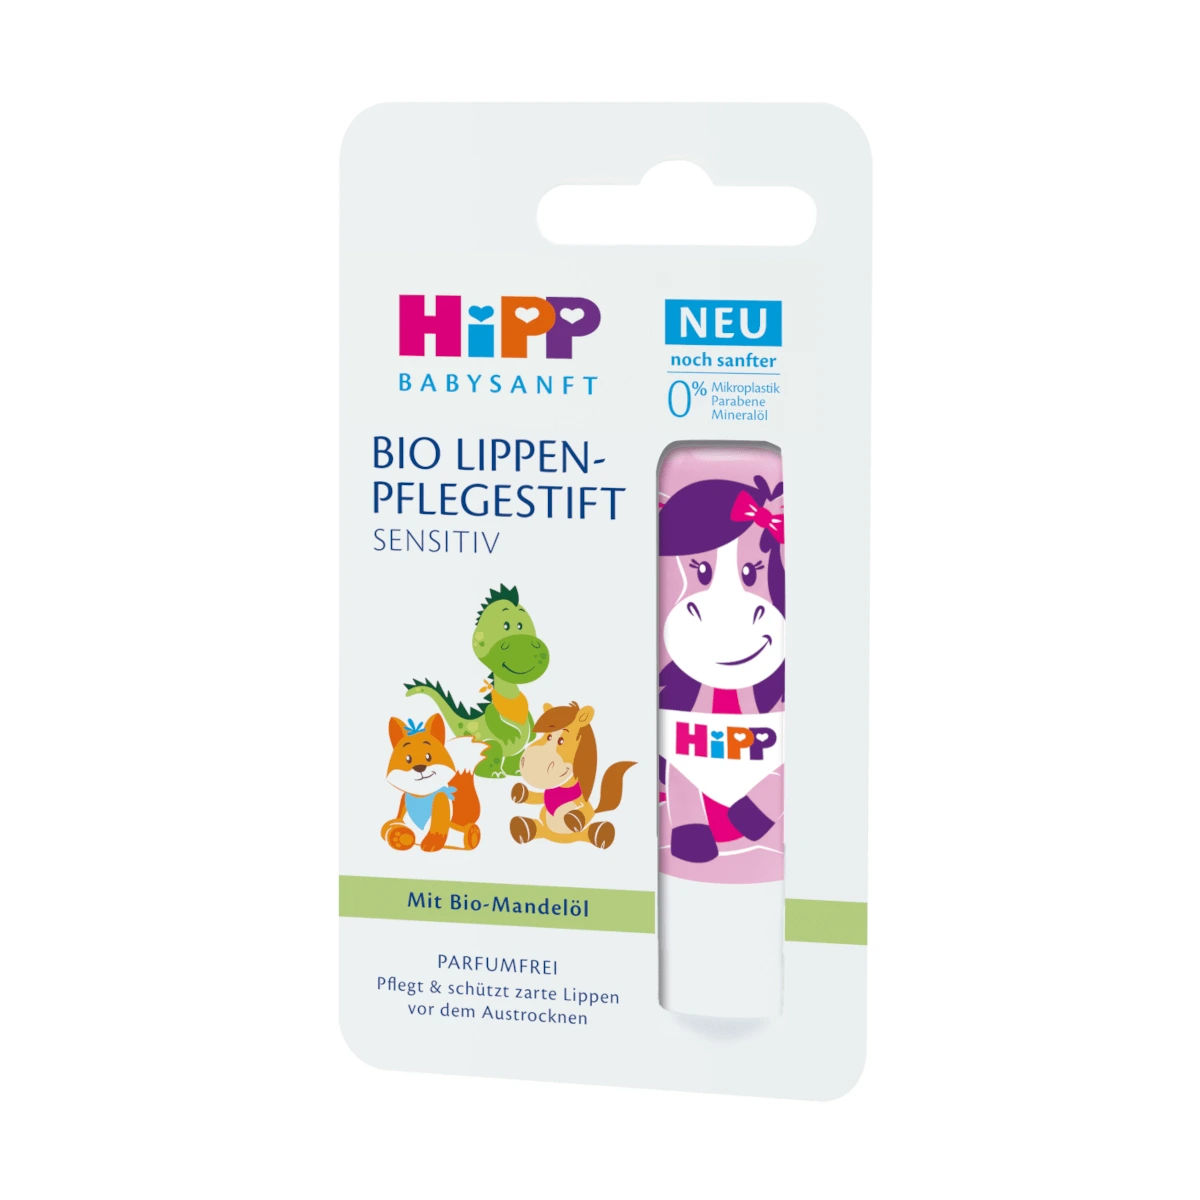 Hipp Babysanft Lippenpflegestift Sensitiv